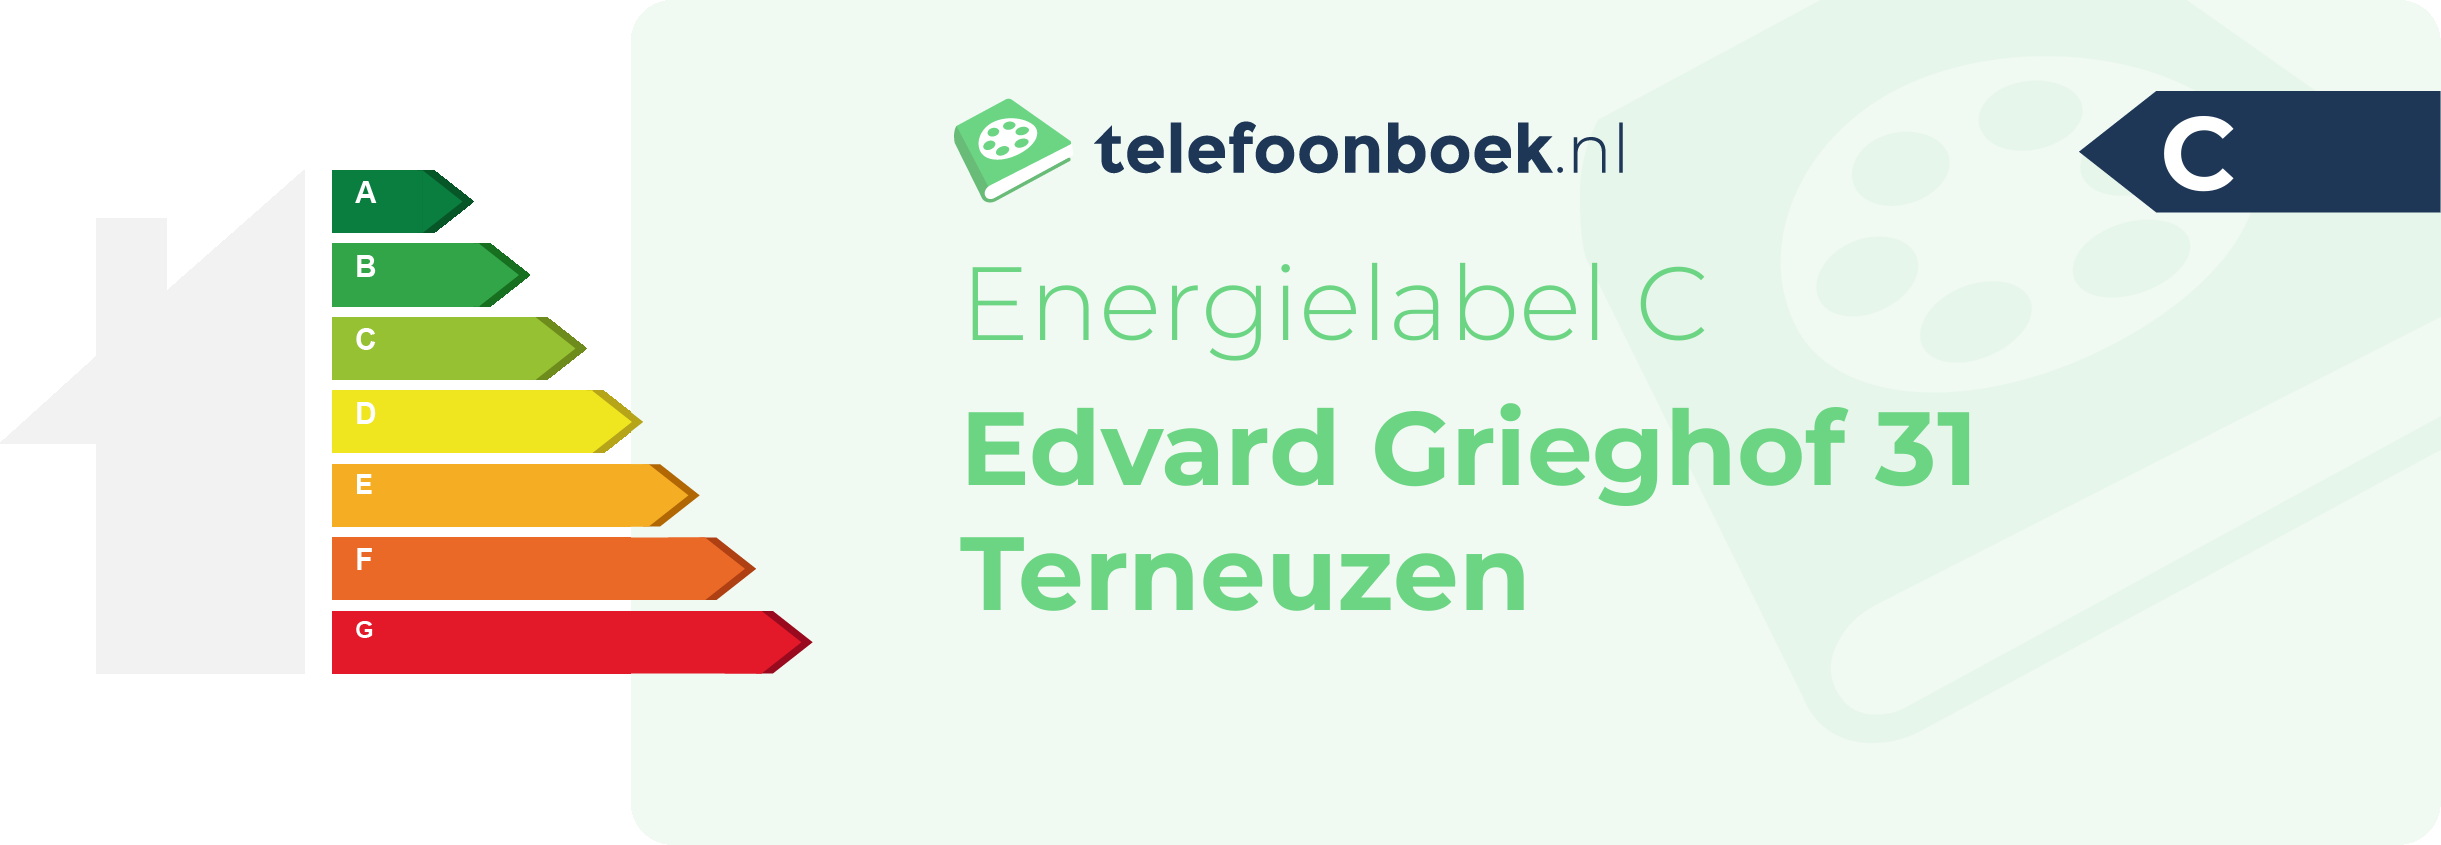 Energielabel Edvard Grieghof 31 Terneuzen